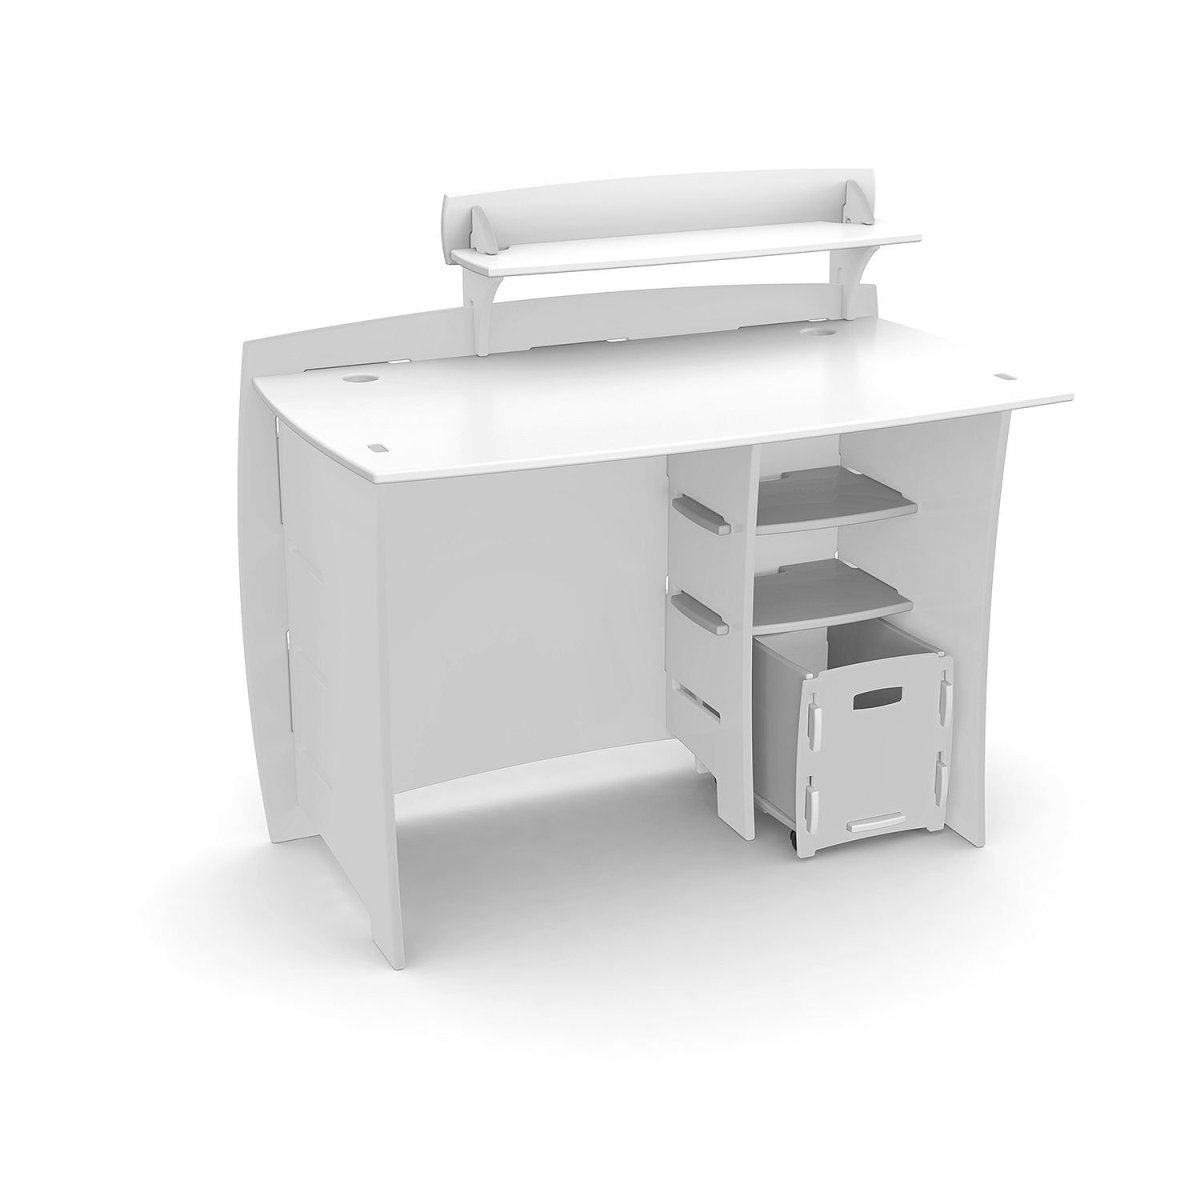 Lege-mpwm-209 Kids Complete Desk System Set - White